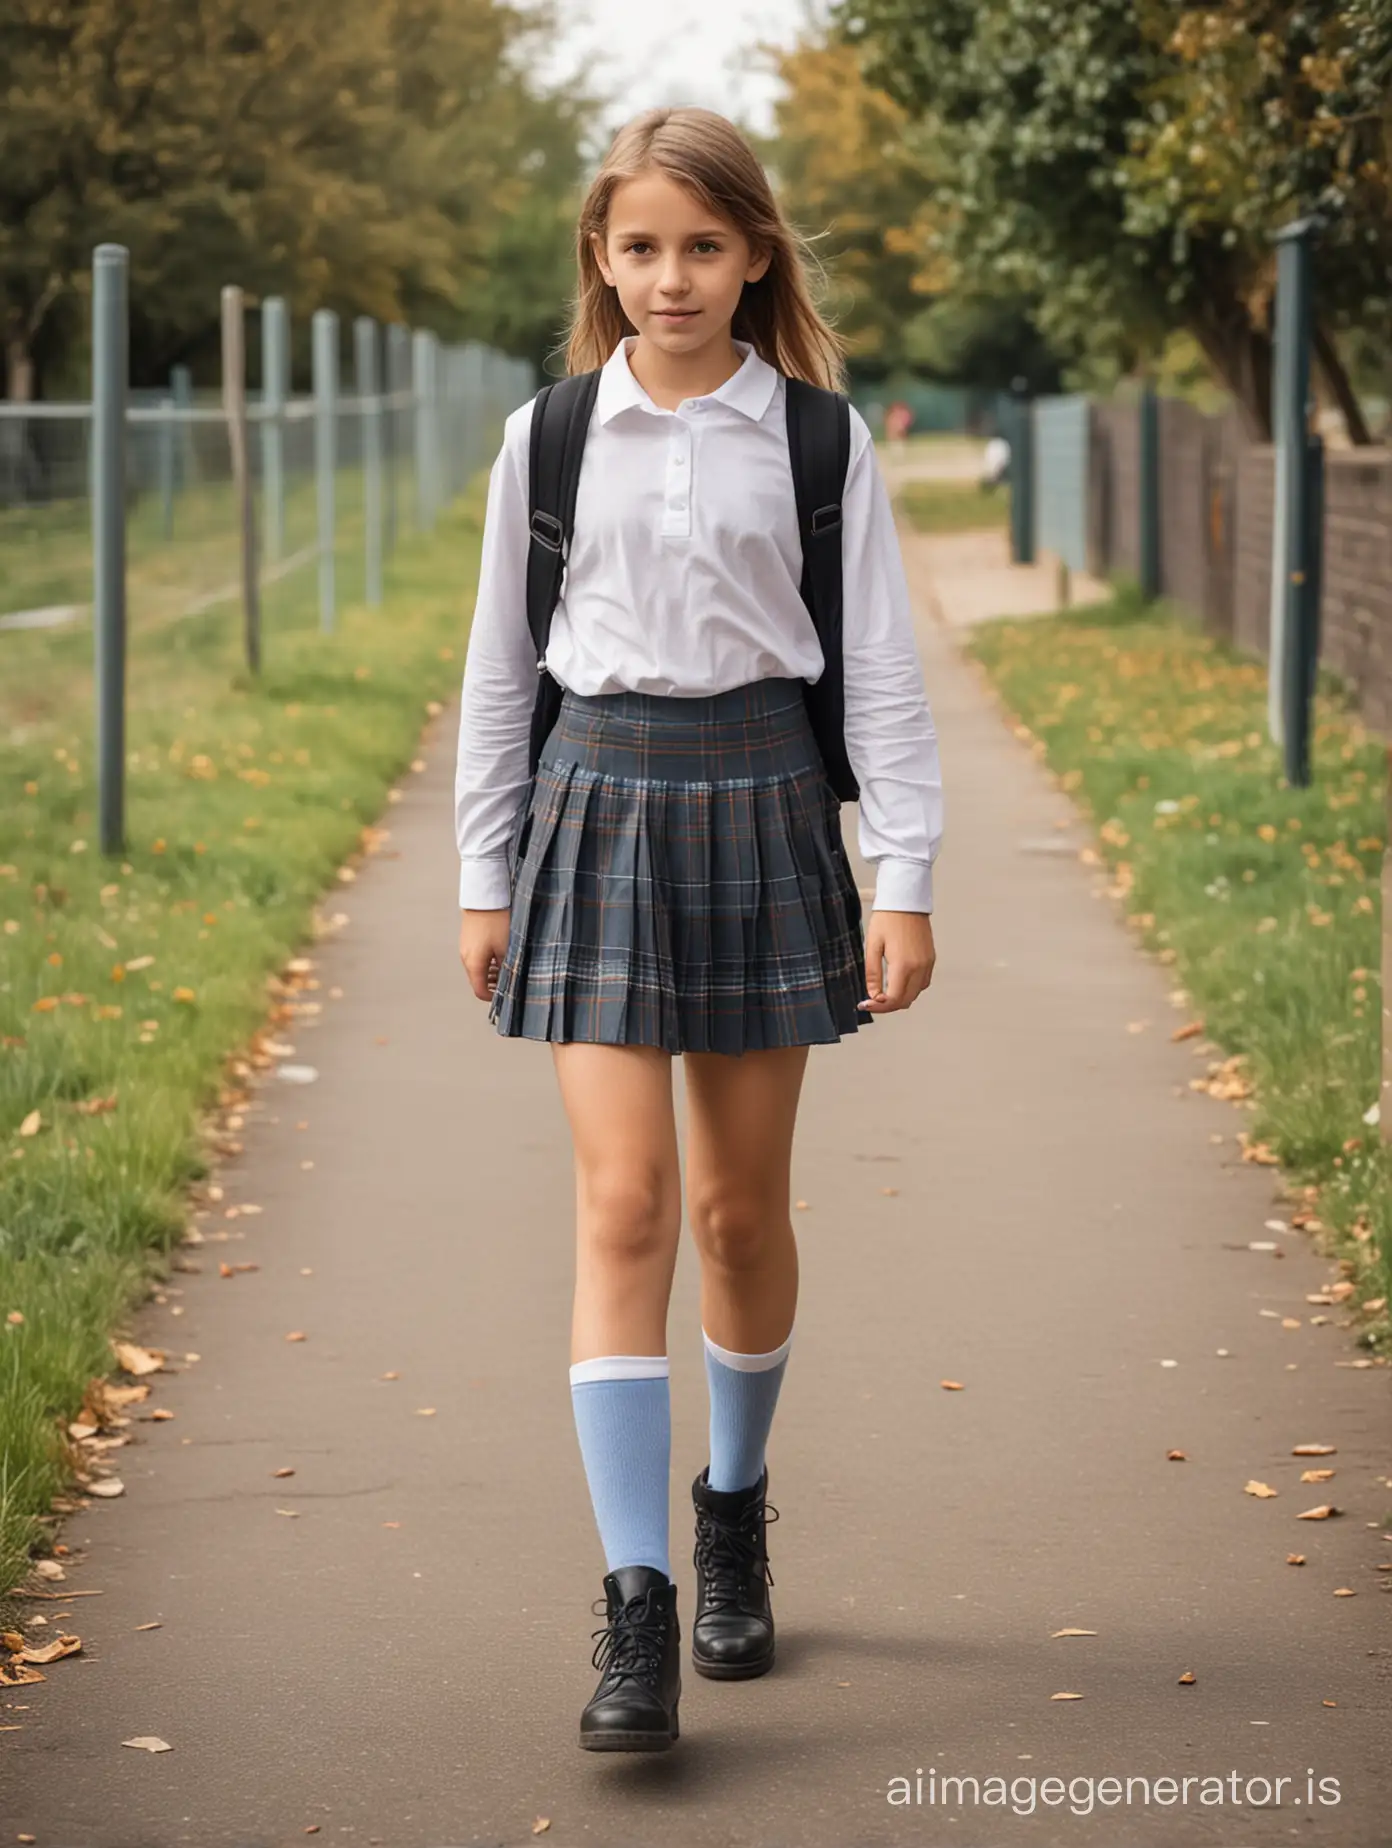 Young-Girl-Walking-to-School-in-Short-Skirt